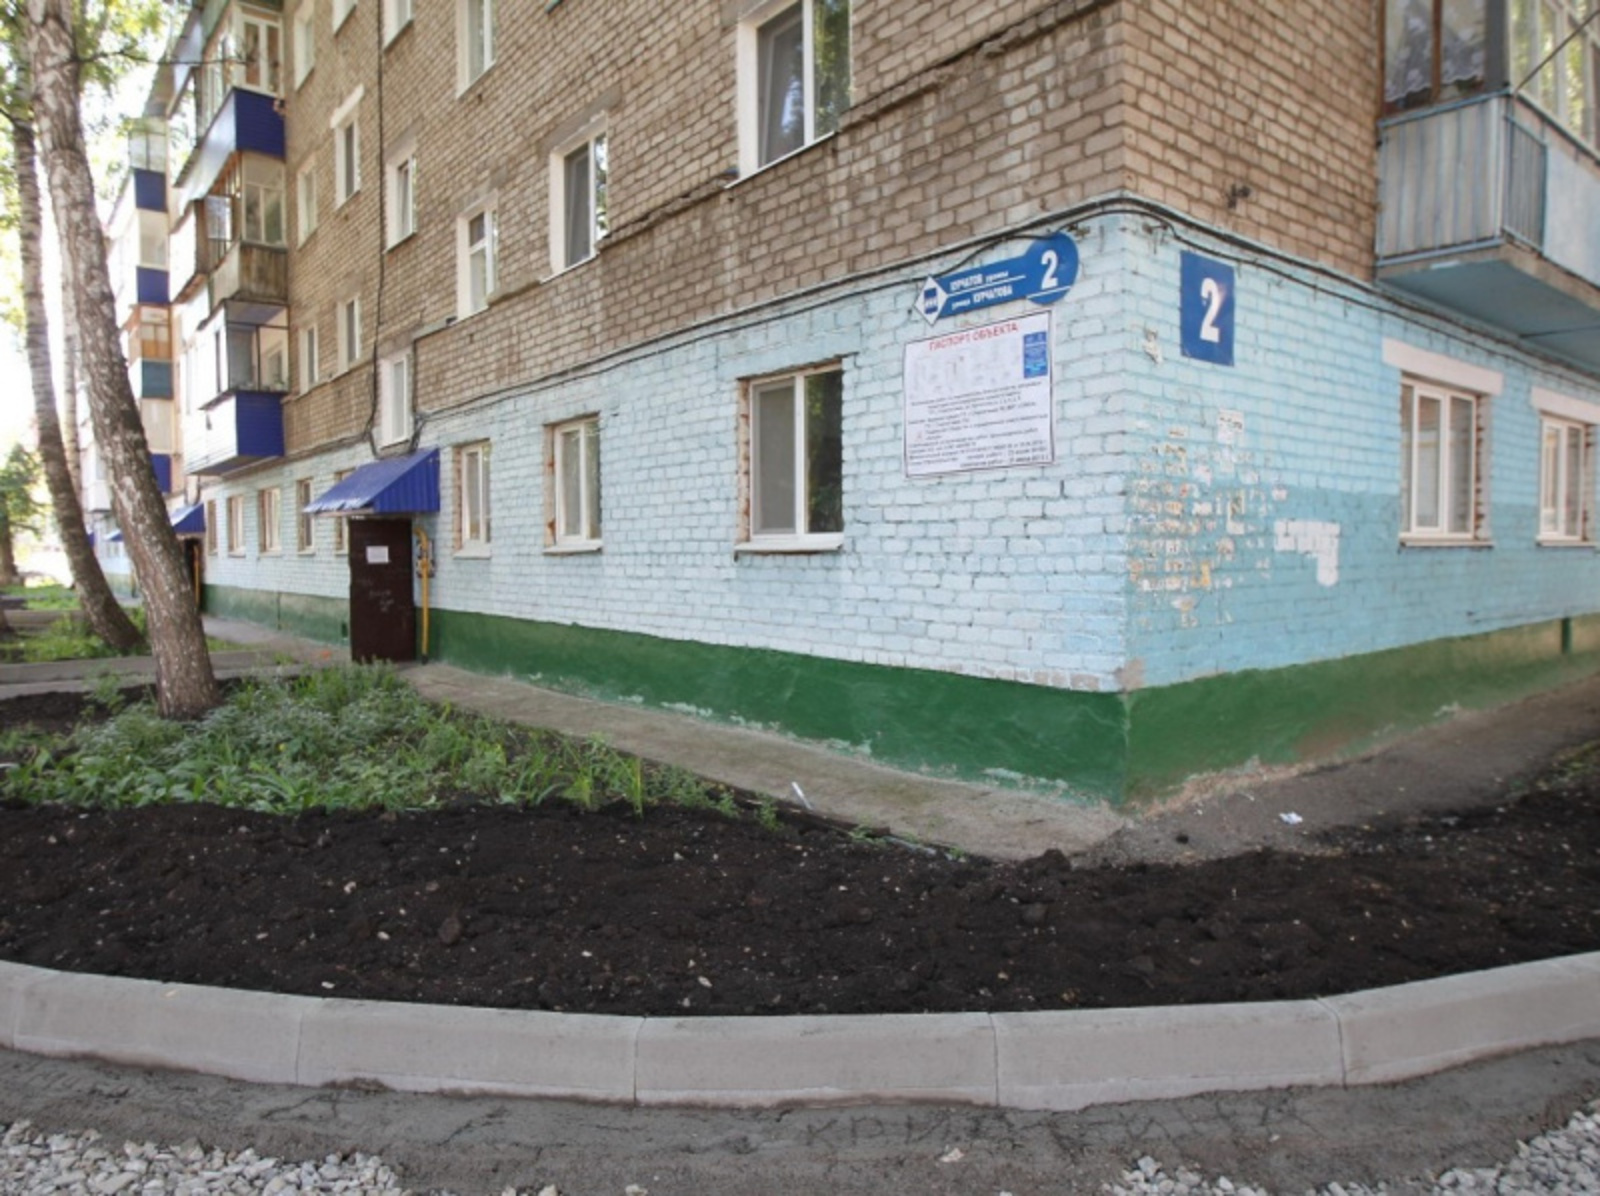 Дом в Стерлитамаке, по улице Курчатова. Vk, личная страница Радия Хабирова.